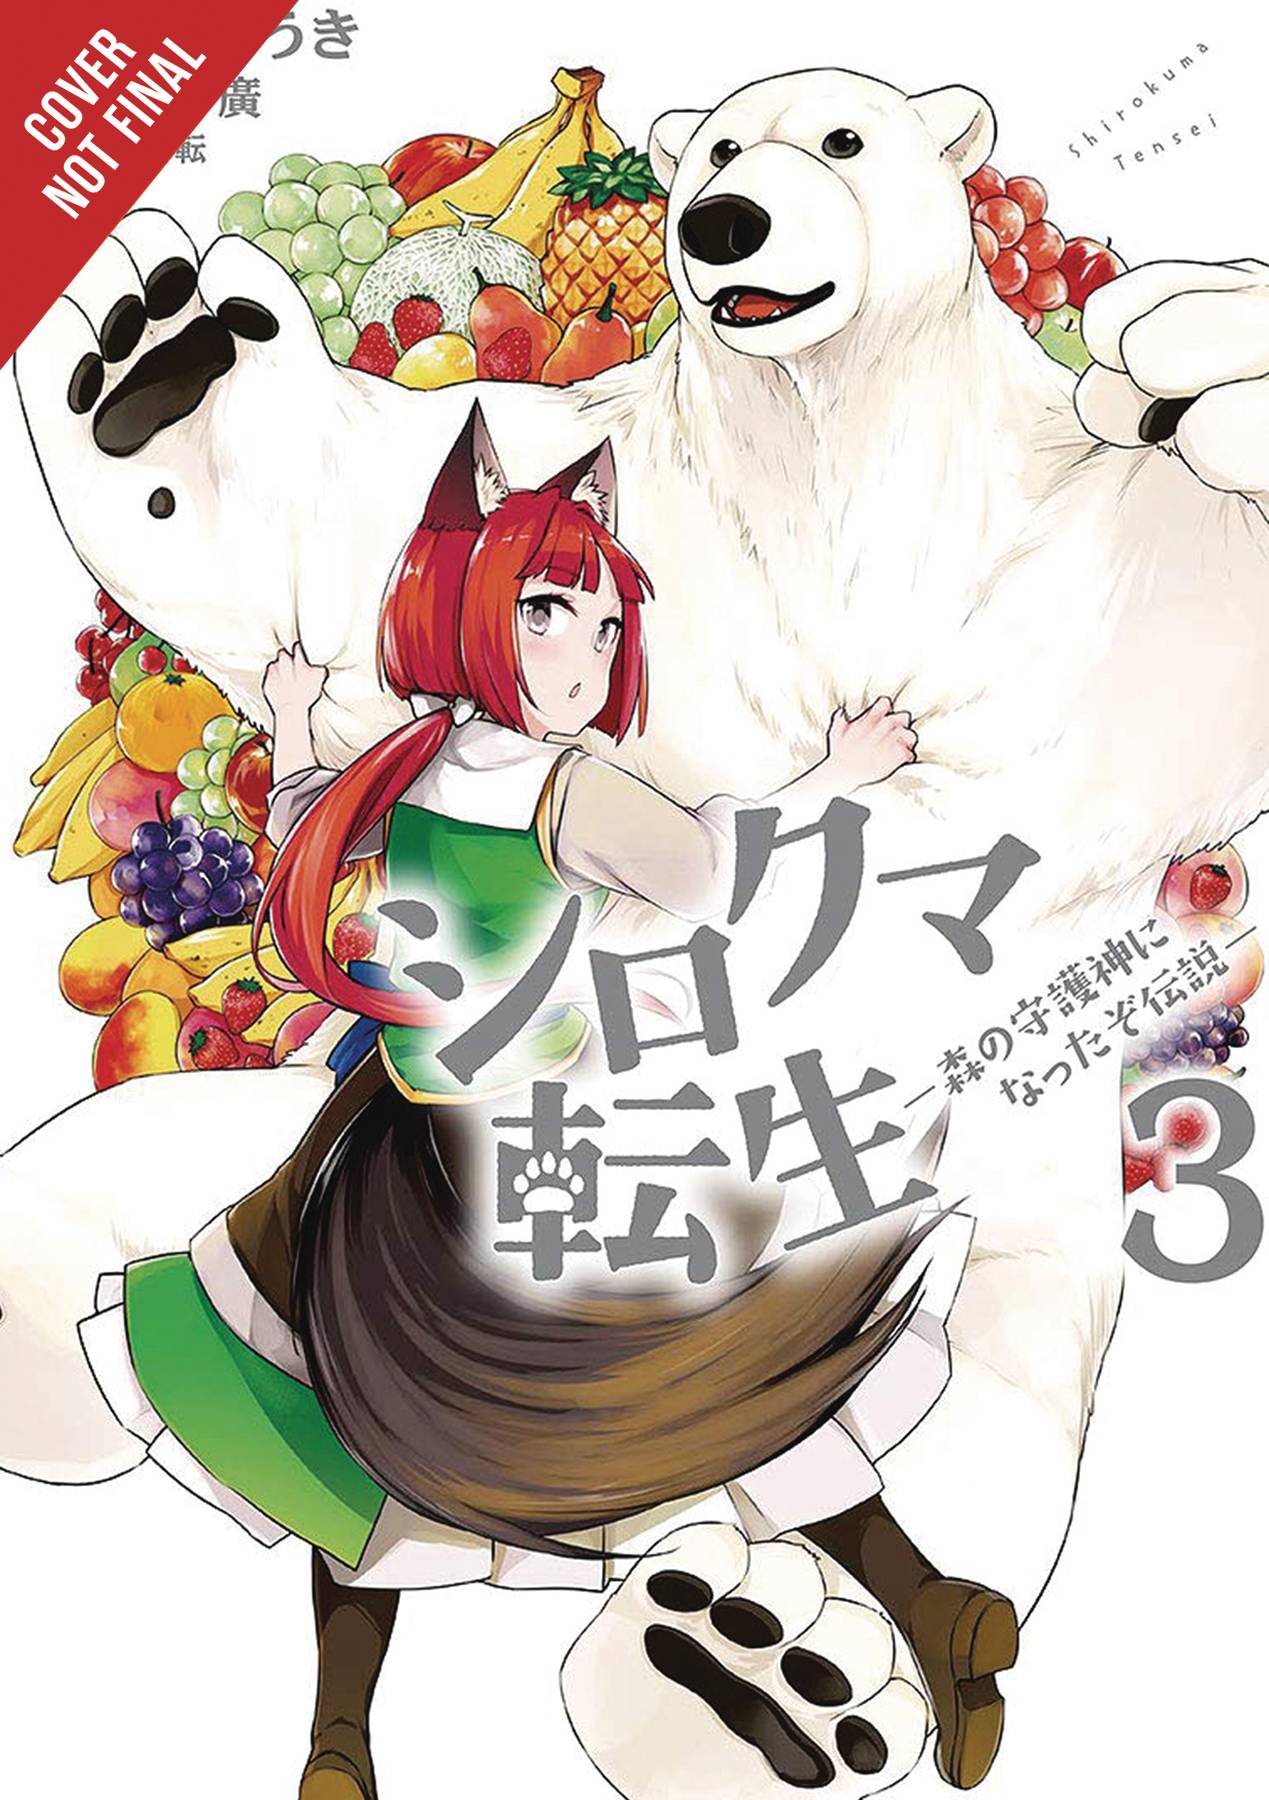 Reborn As Polar Bear Legend How Forest Guardian Manga Volume 3